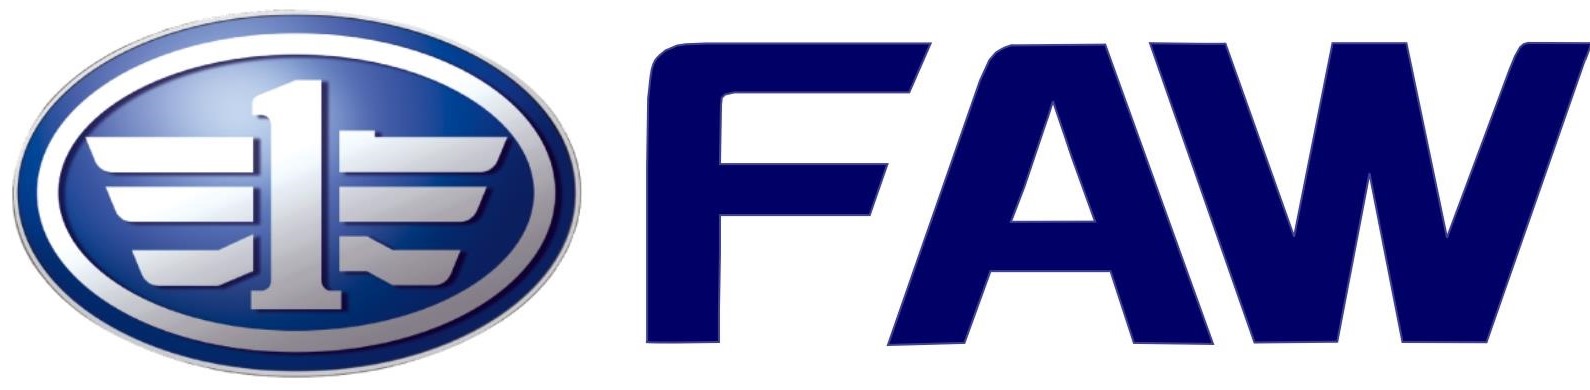 FAW logo